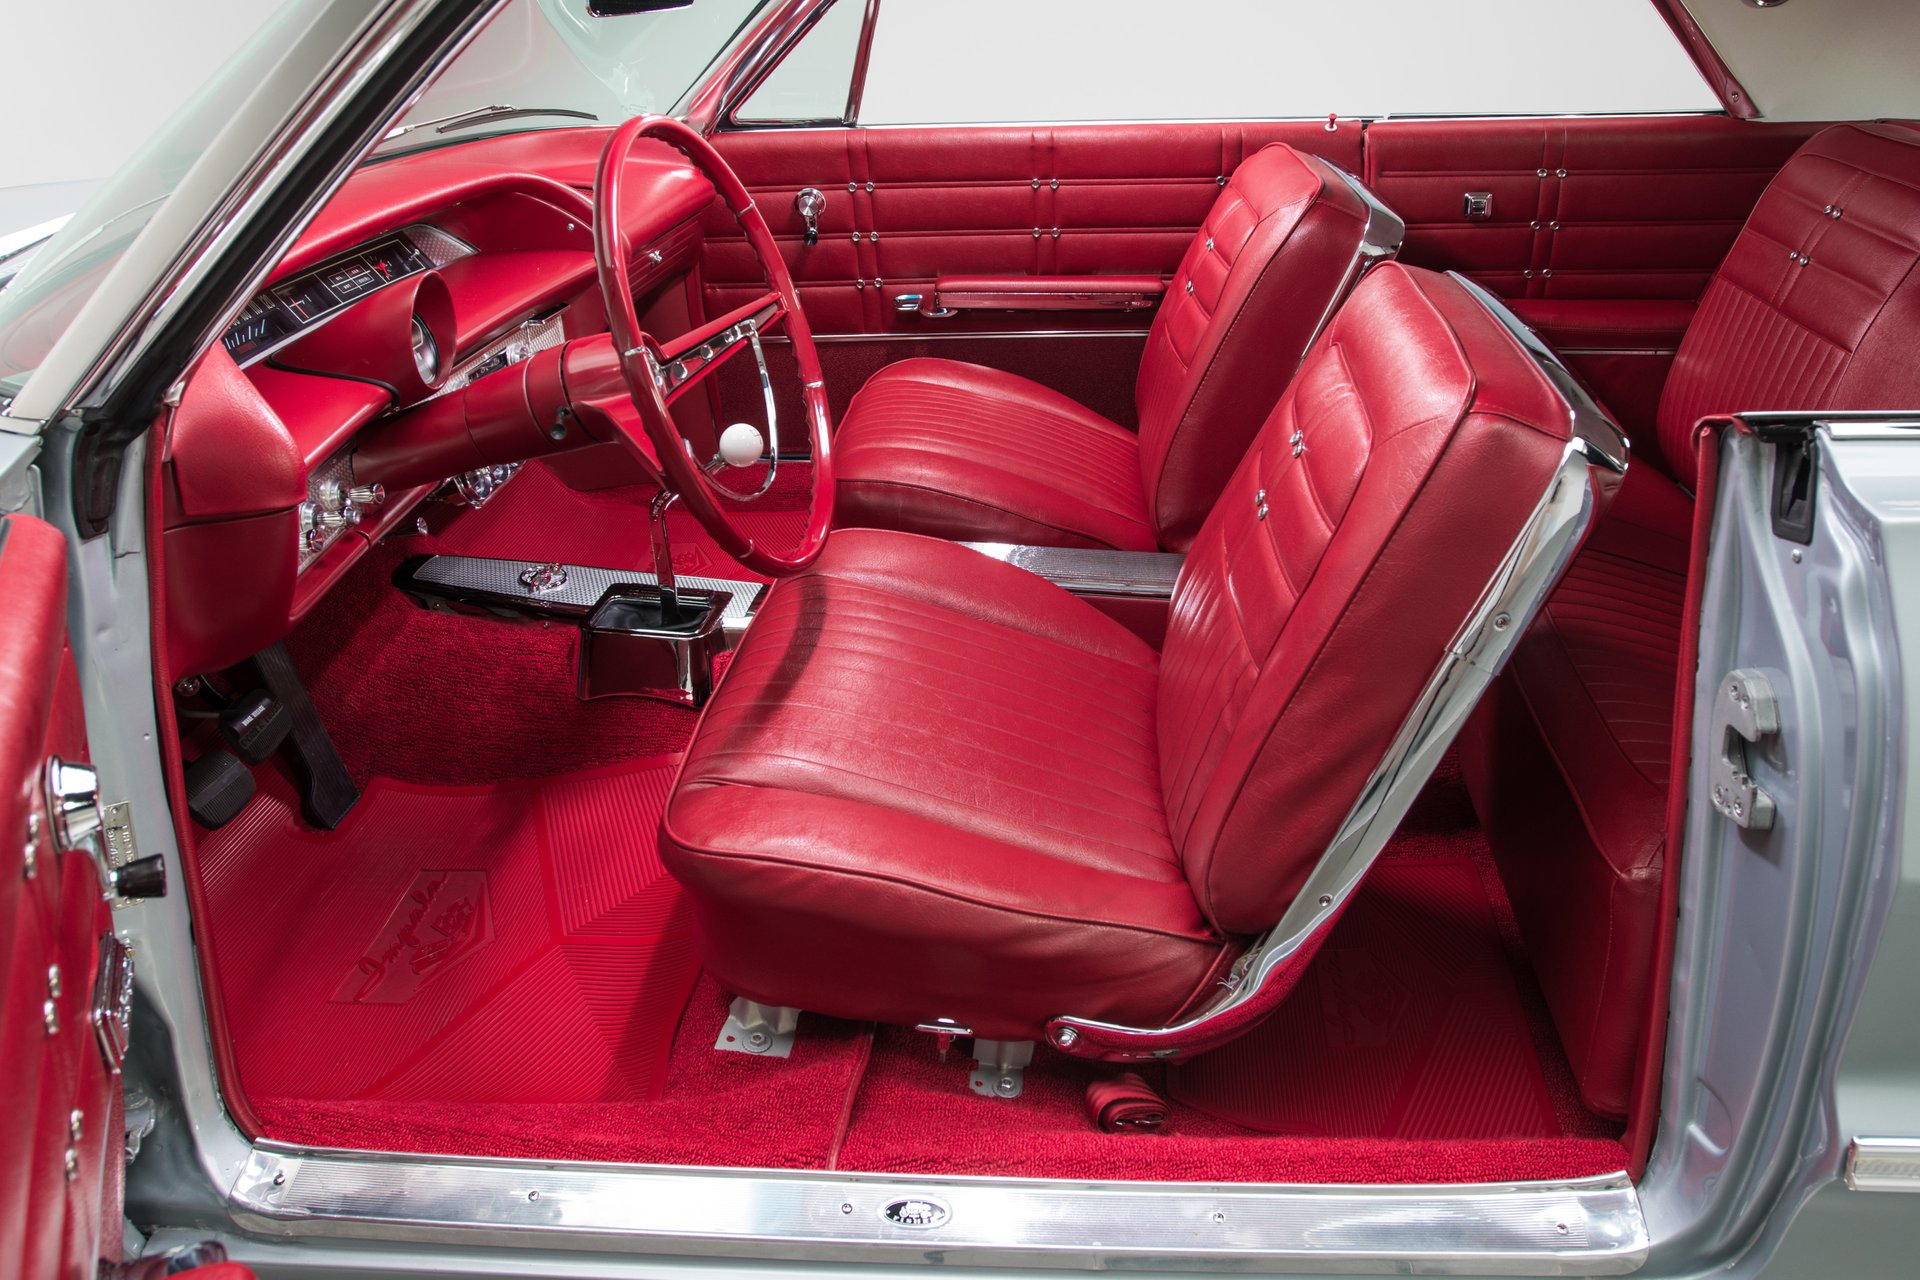 134414 1963 Chevrolet Impala Rk Motors Classic Cars For Sale